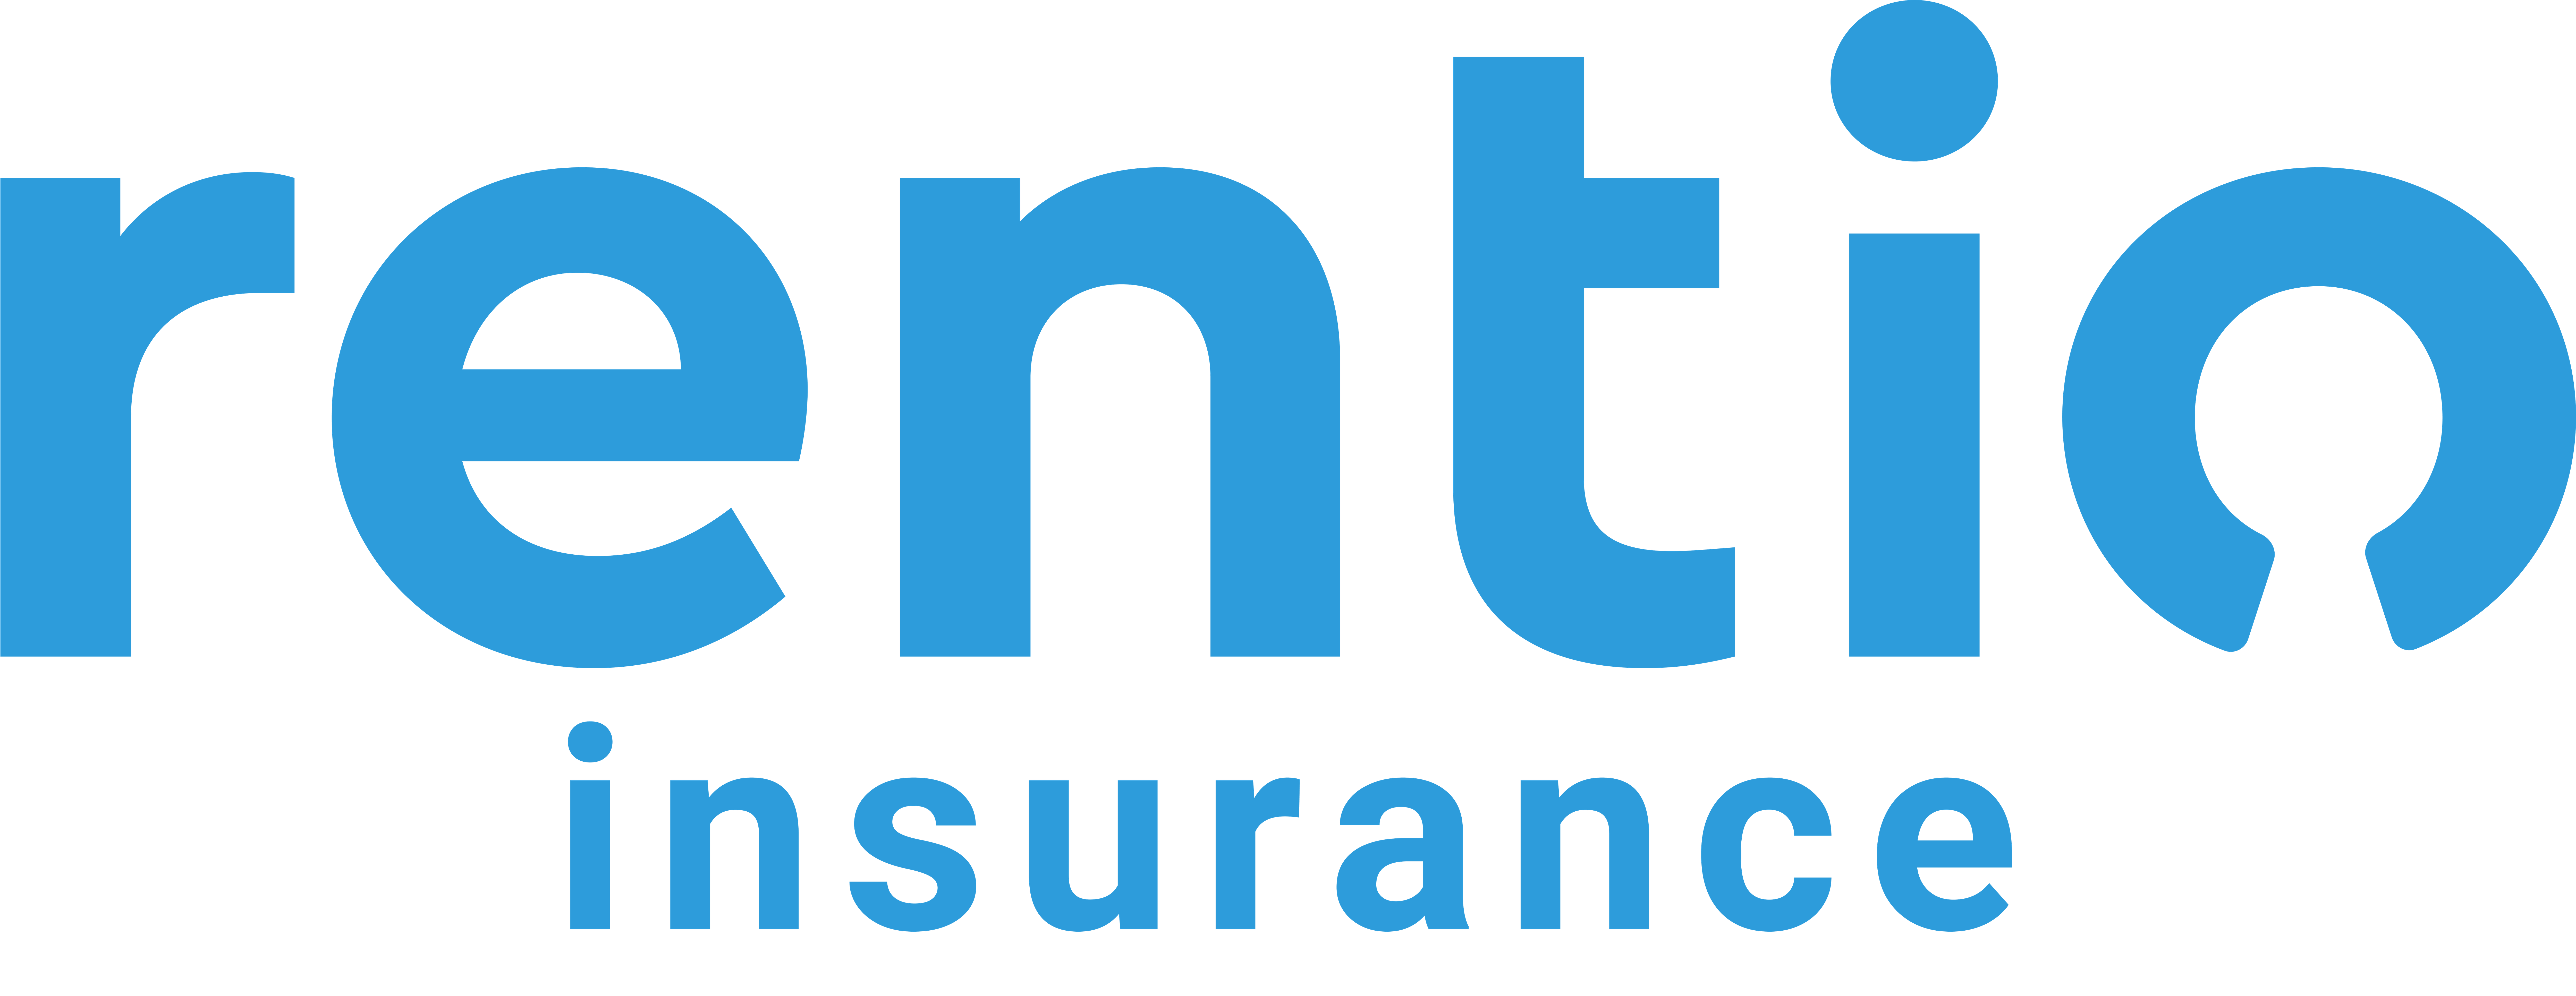 Rentio Insurance